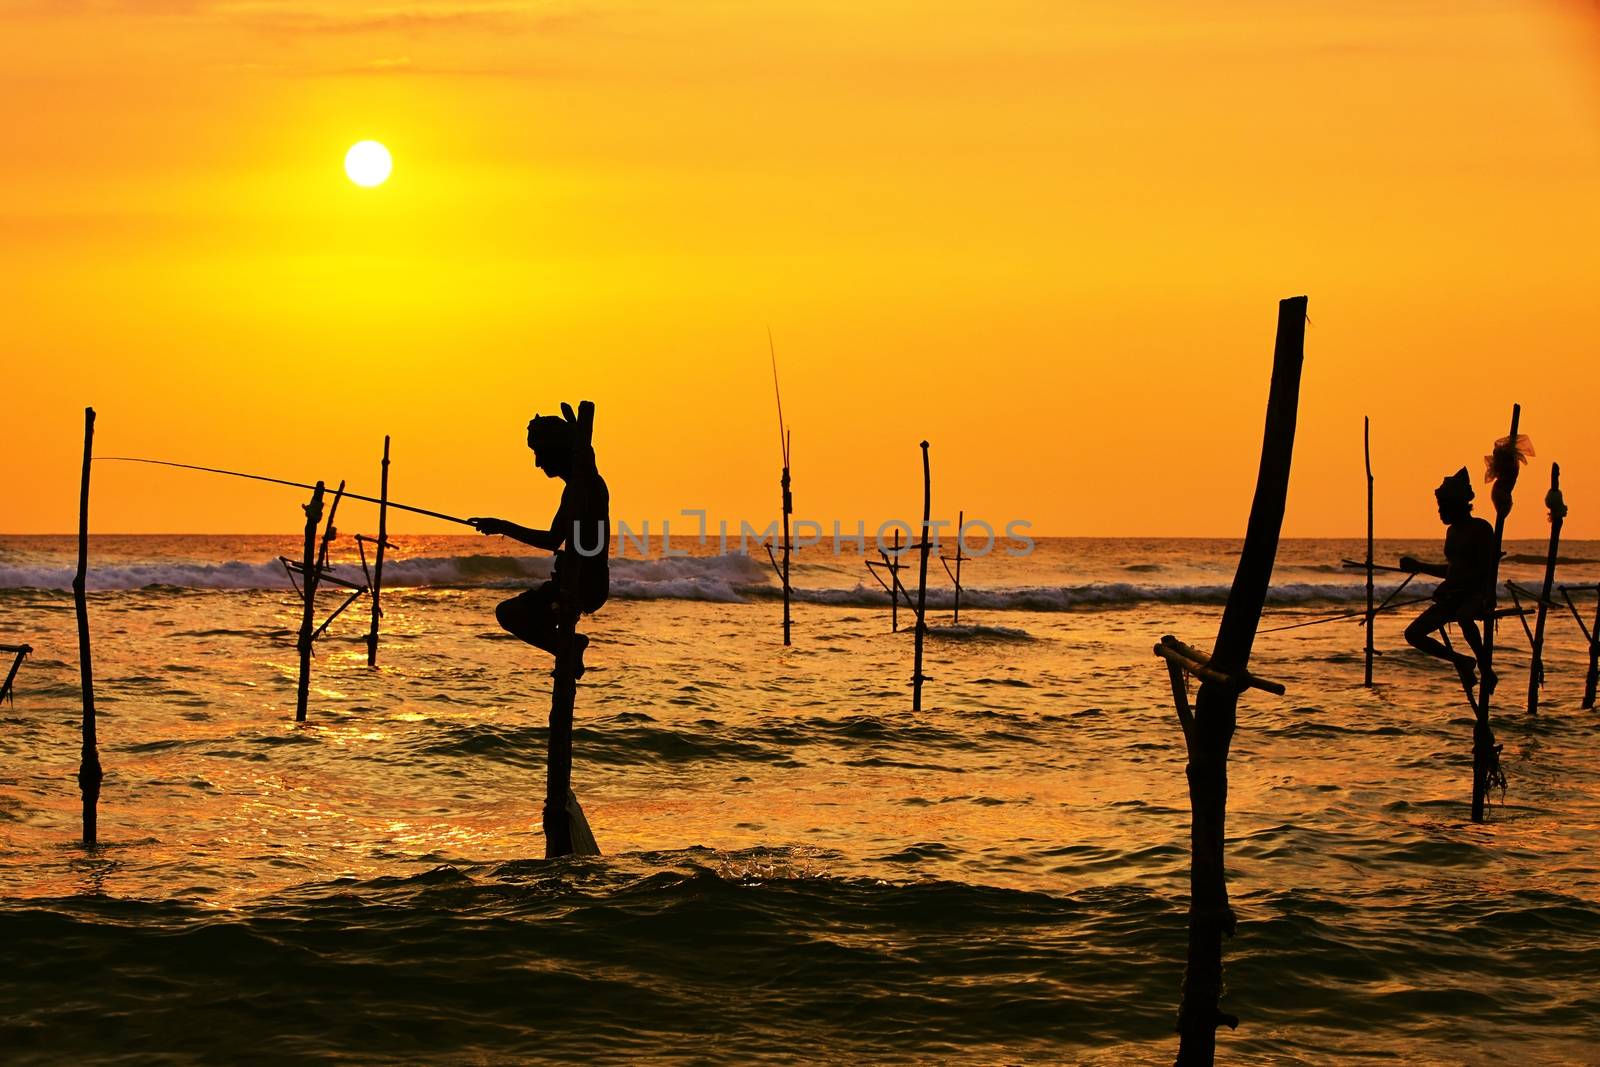 Stilt fishing by Chalabala